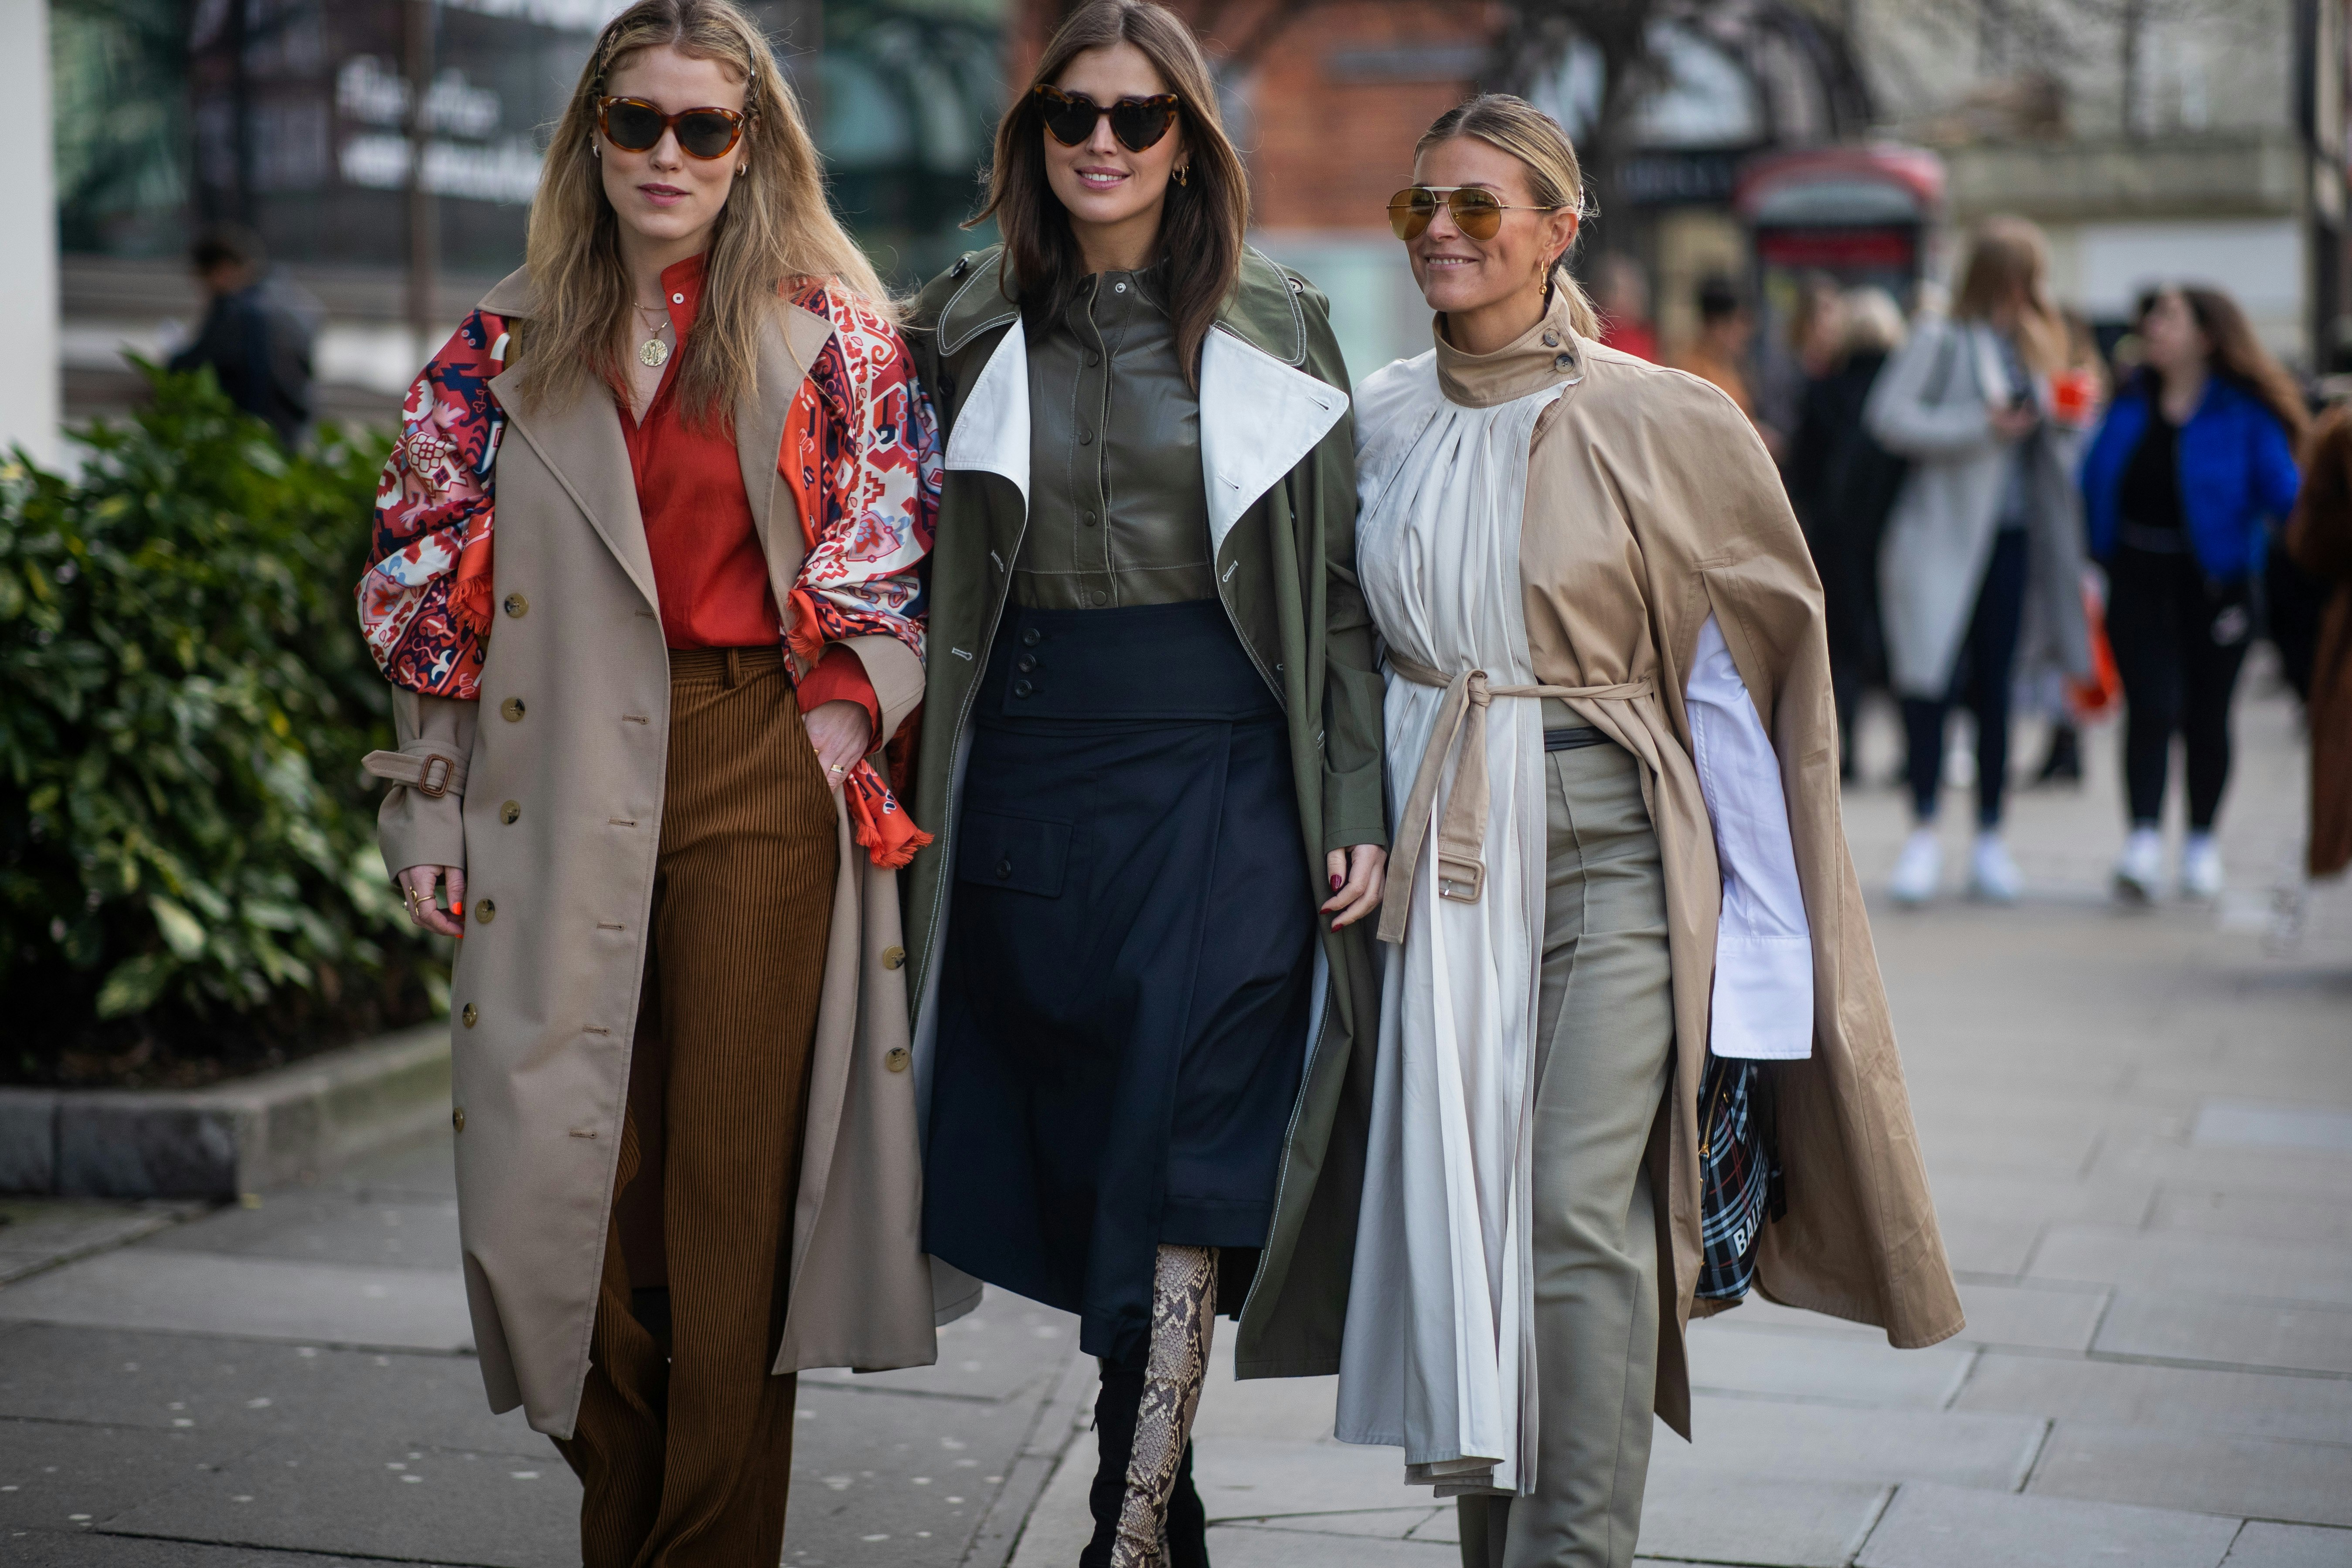 London Fashion Week Street Style with Team Liberty